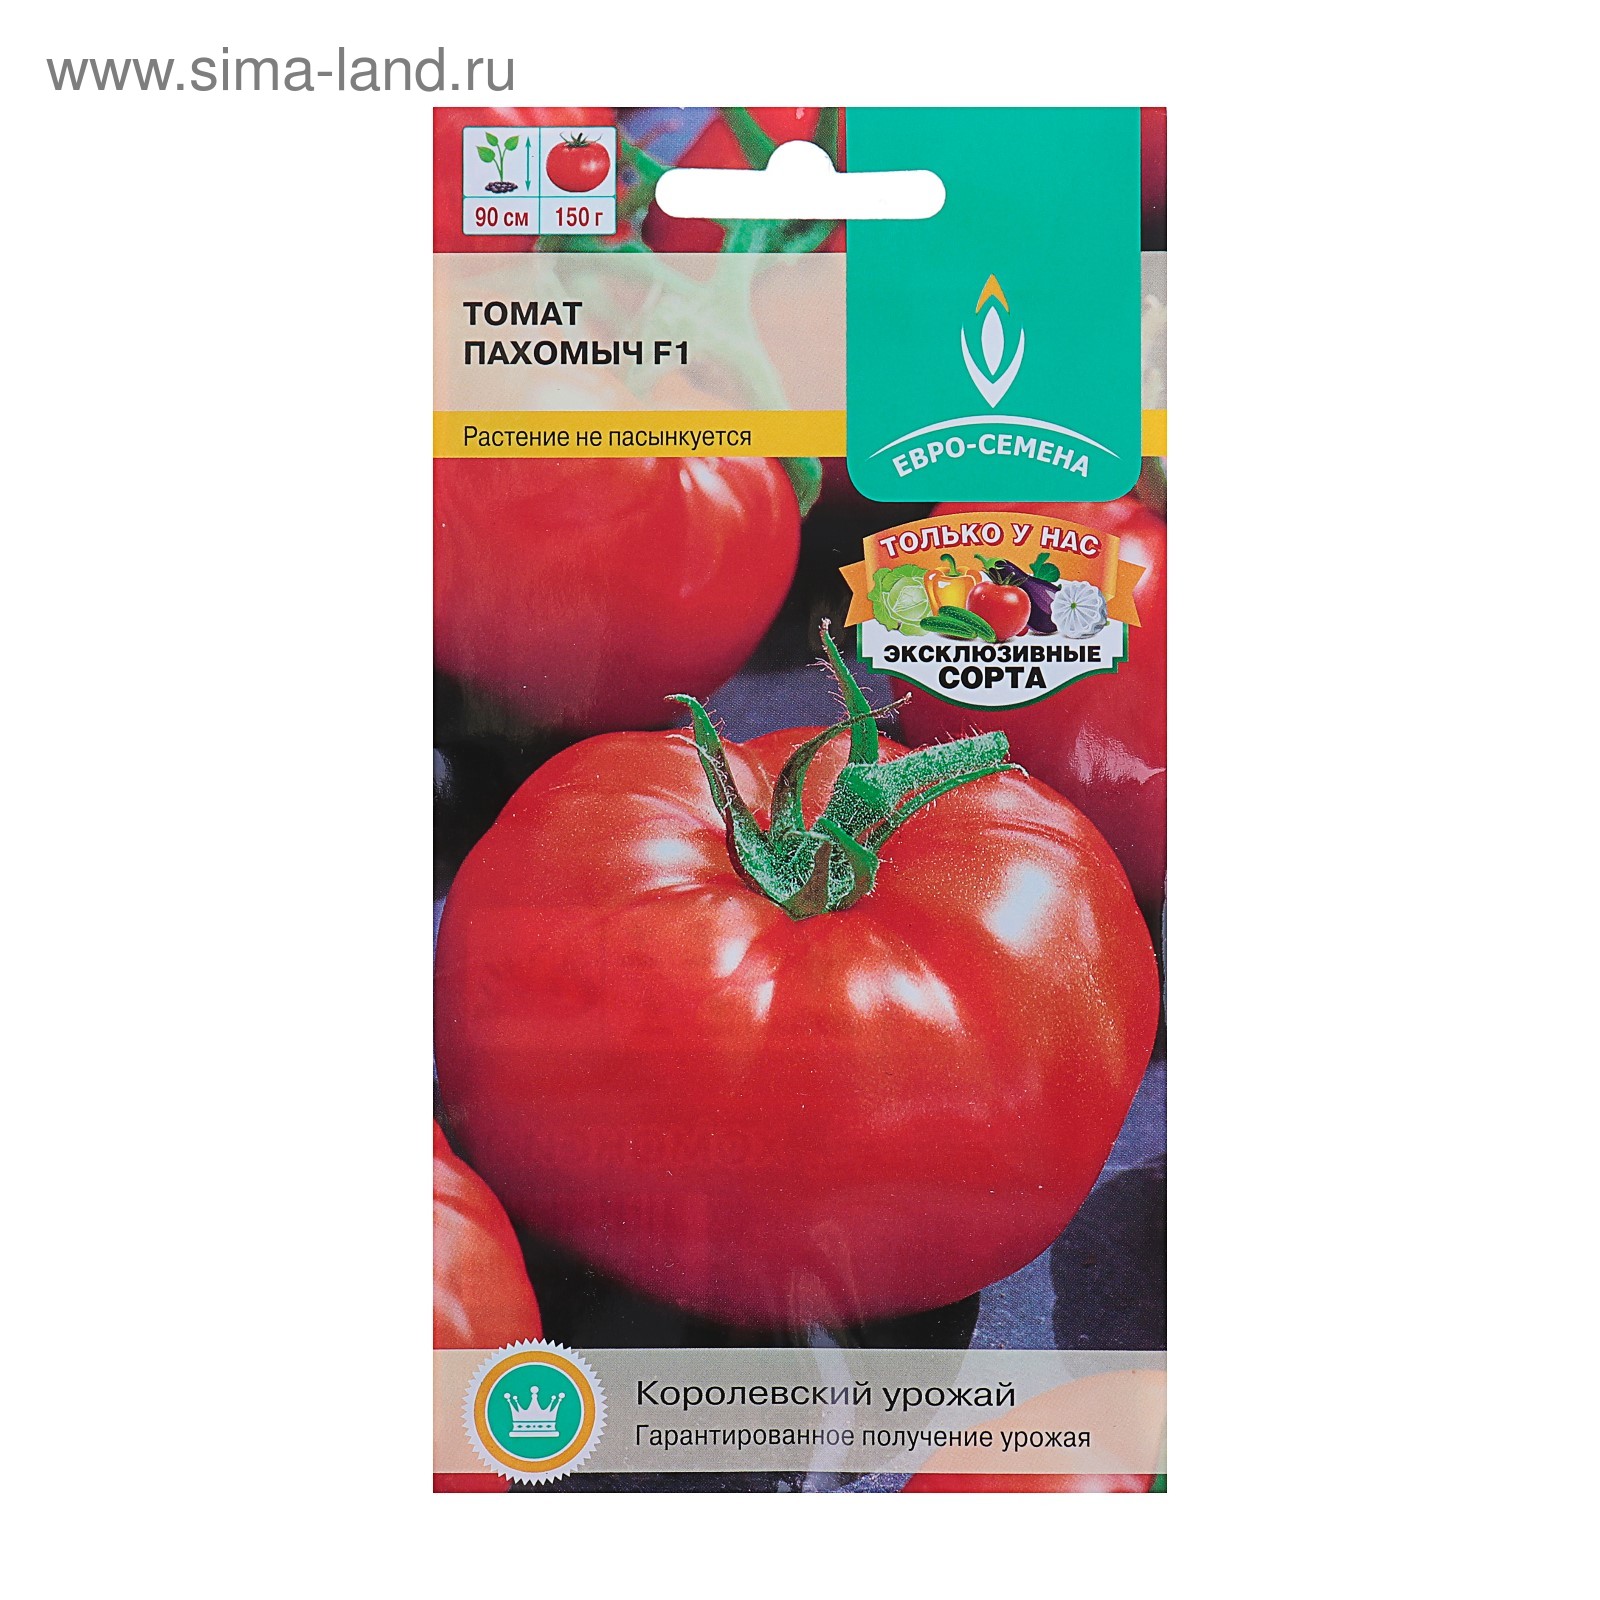 Пахомыч томаты